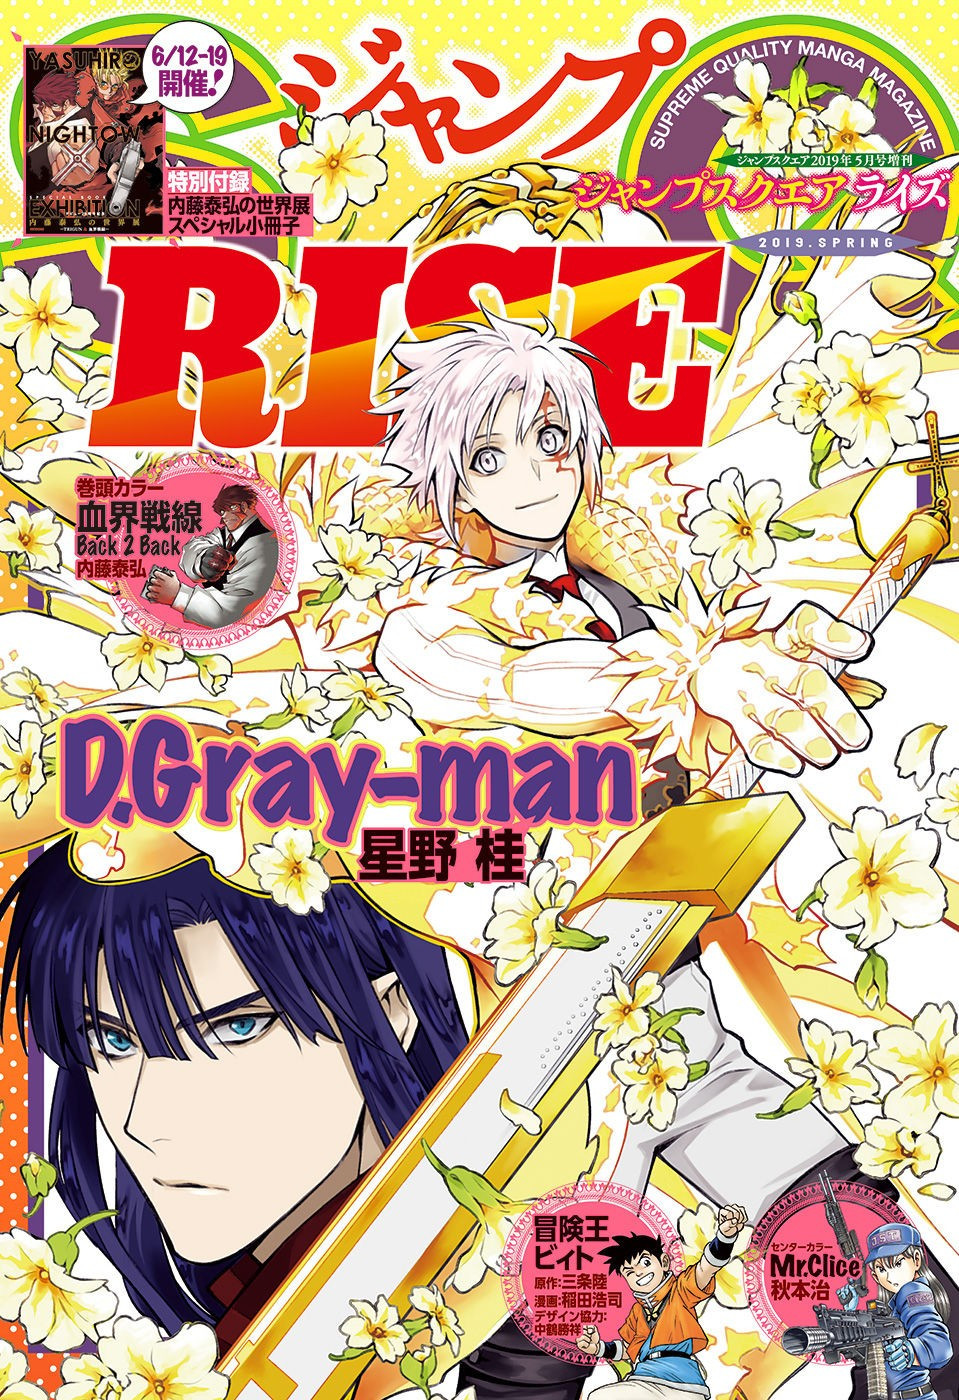 D Gray Man Chapter 232 Page 1 Raw Sen Manga